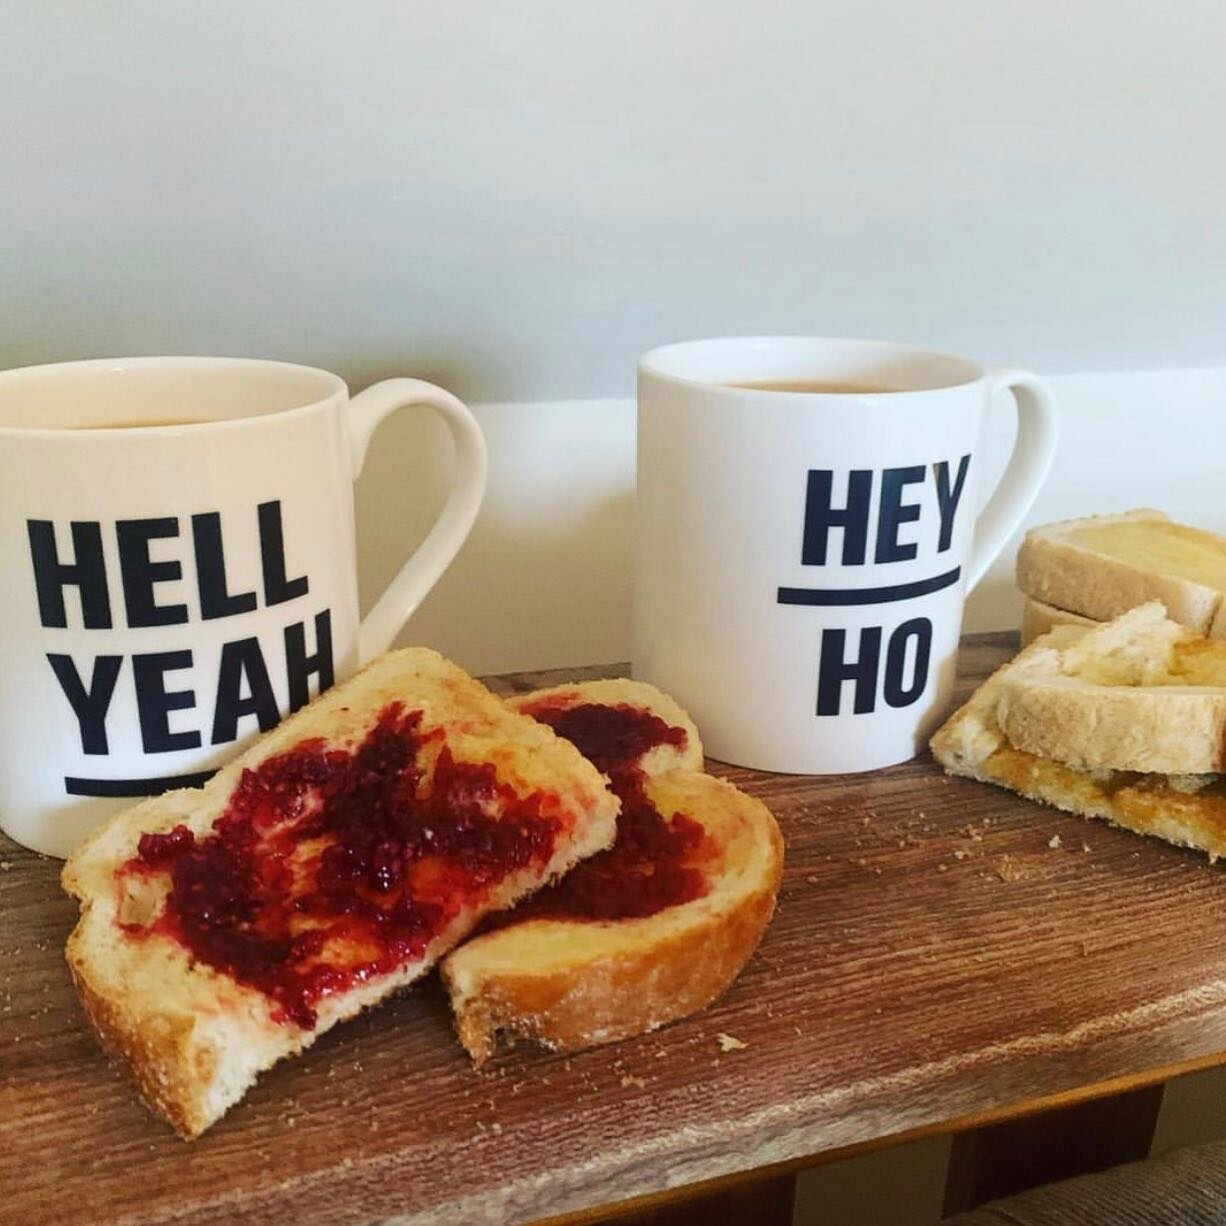 Lovely breakfast post featuring our mugs. Thanks @janepottie ! #mugs #breakast #toastandjam #hellyeah #heyho #typography #graphicdesign #homeware #giftideas #christmas #christmasgifts  #minimalist #mug #mugs